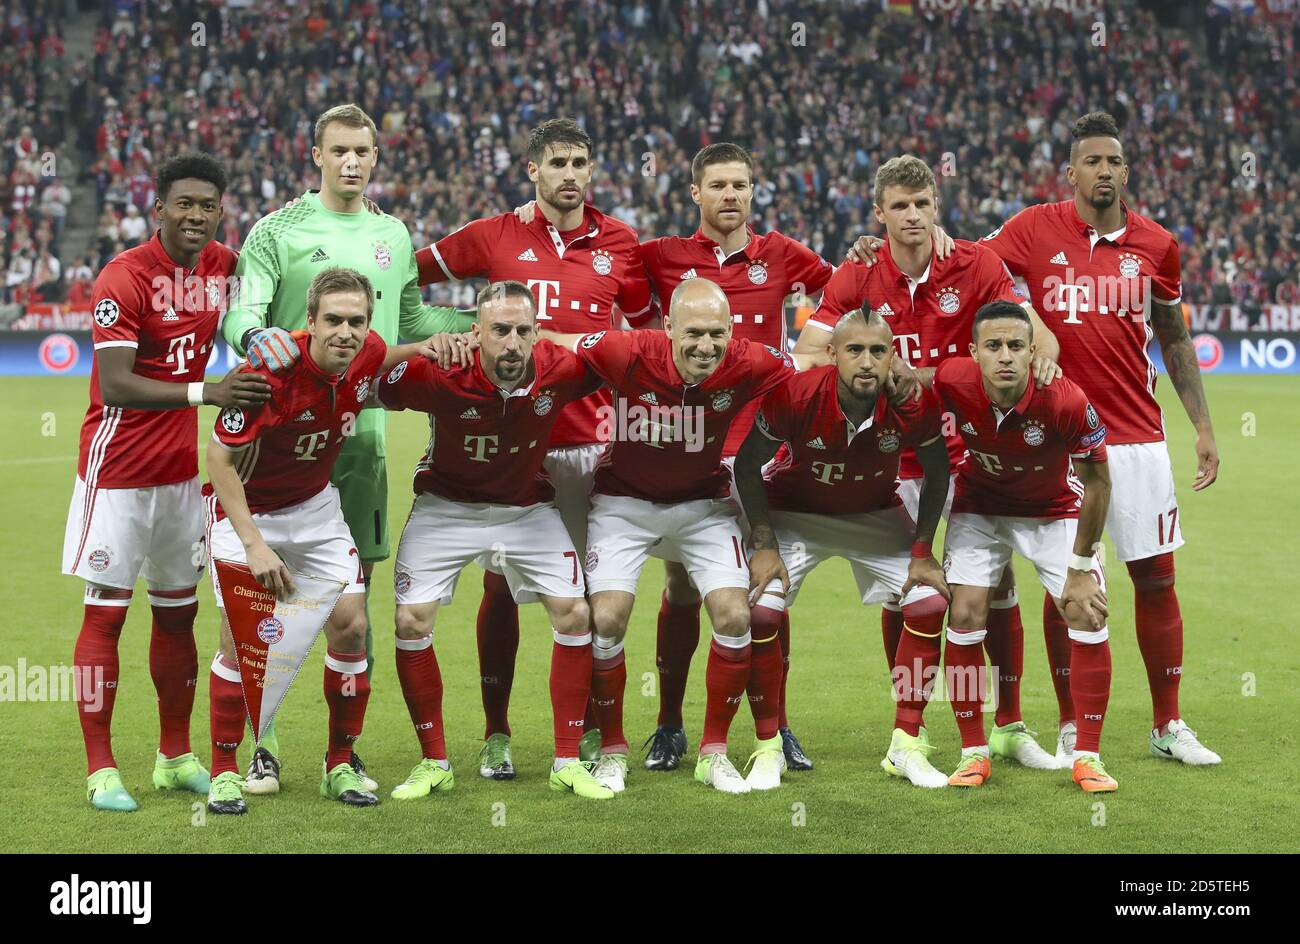 Groupe d'équipe Bayern Munich, rangée supérieure (de gauche à droite) :  David Alaba, Manuel Neuer, Javi Martinez, Xabi Alonso, Thomas Muller et  Jerome Boateng. Rangée du bas (de gauche à droite) :